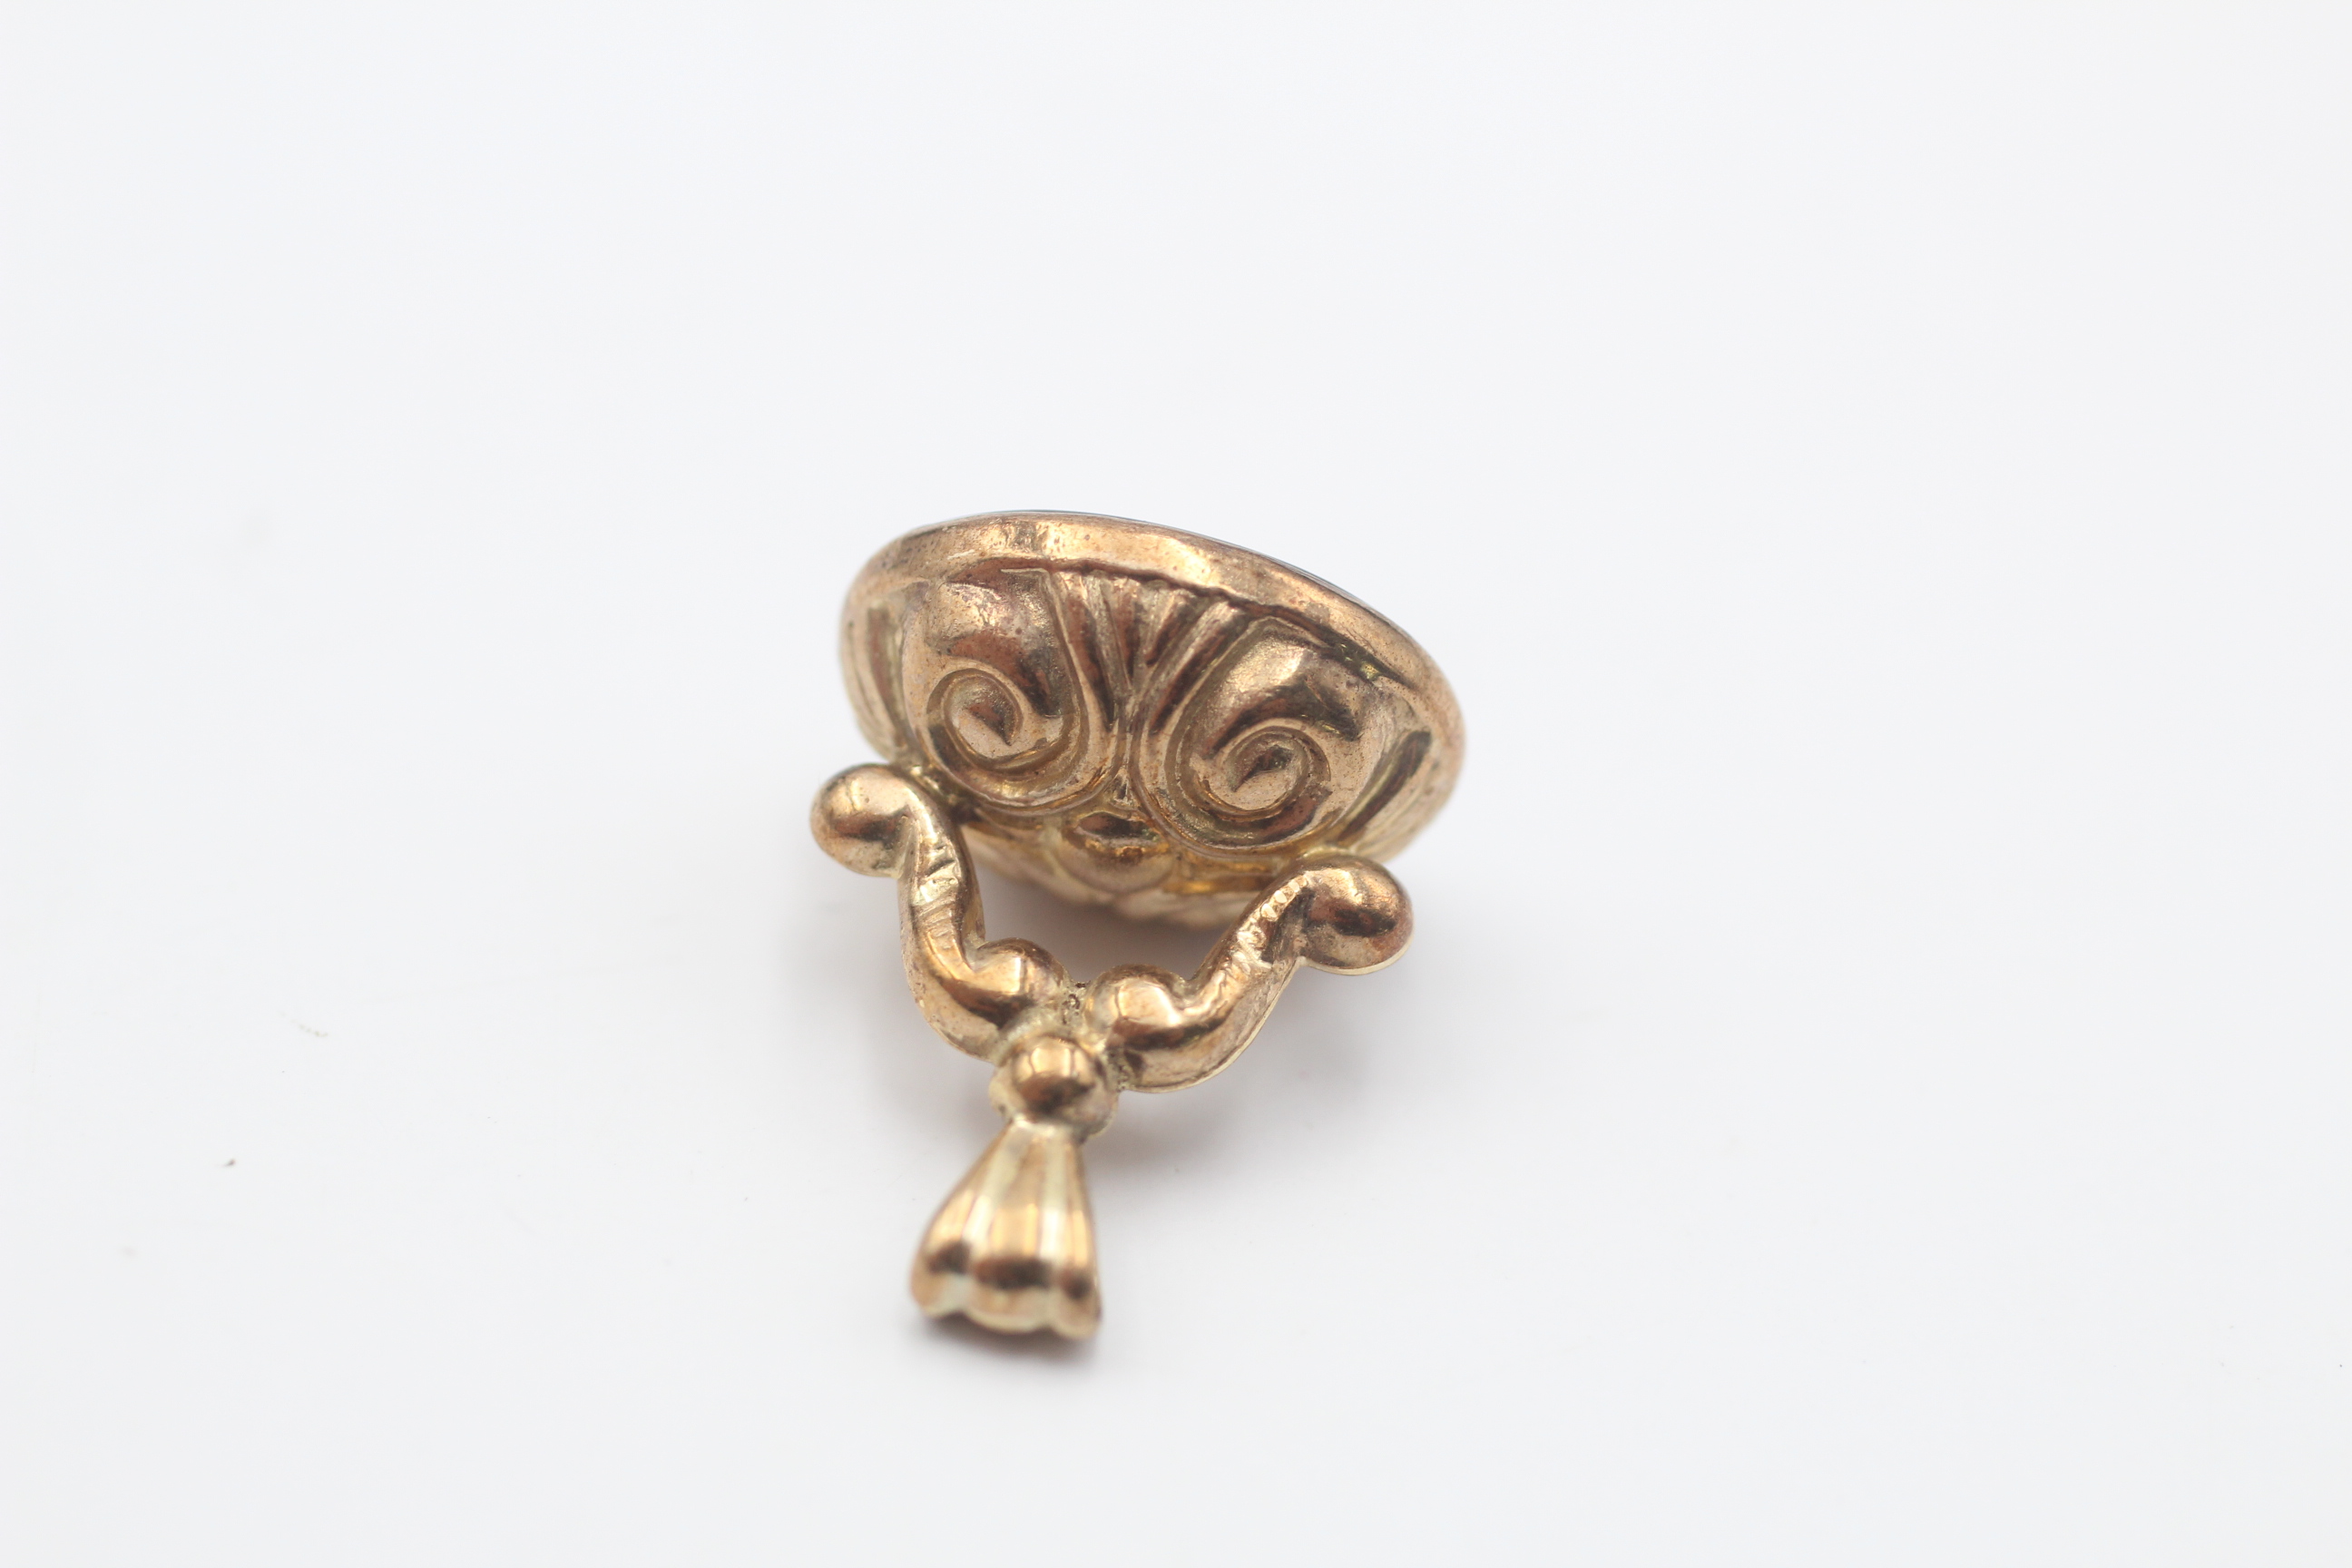 9ct gold vintage onyx roman soldier profile intaglio fob pendant (1.7g) - Image 3 of 5